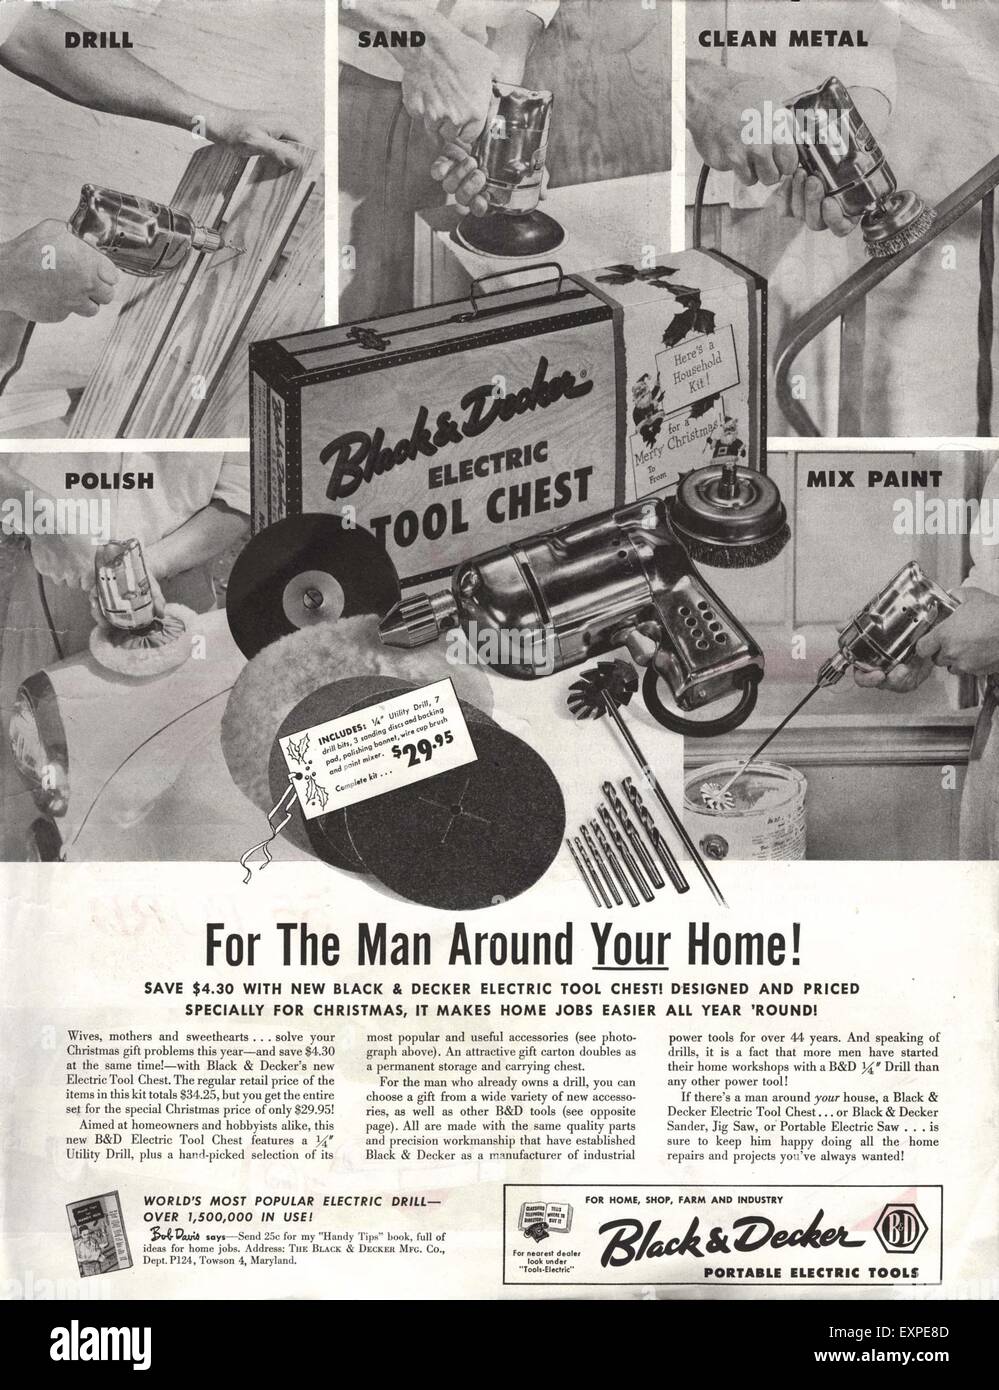 https://c8.alamy.com/comp/EXPE8D/1950s-usa-black-decker-magazine-advert-EXPE8D.jpg